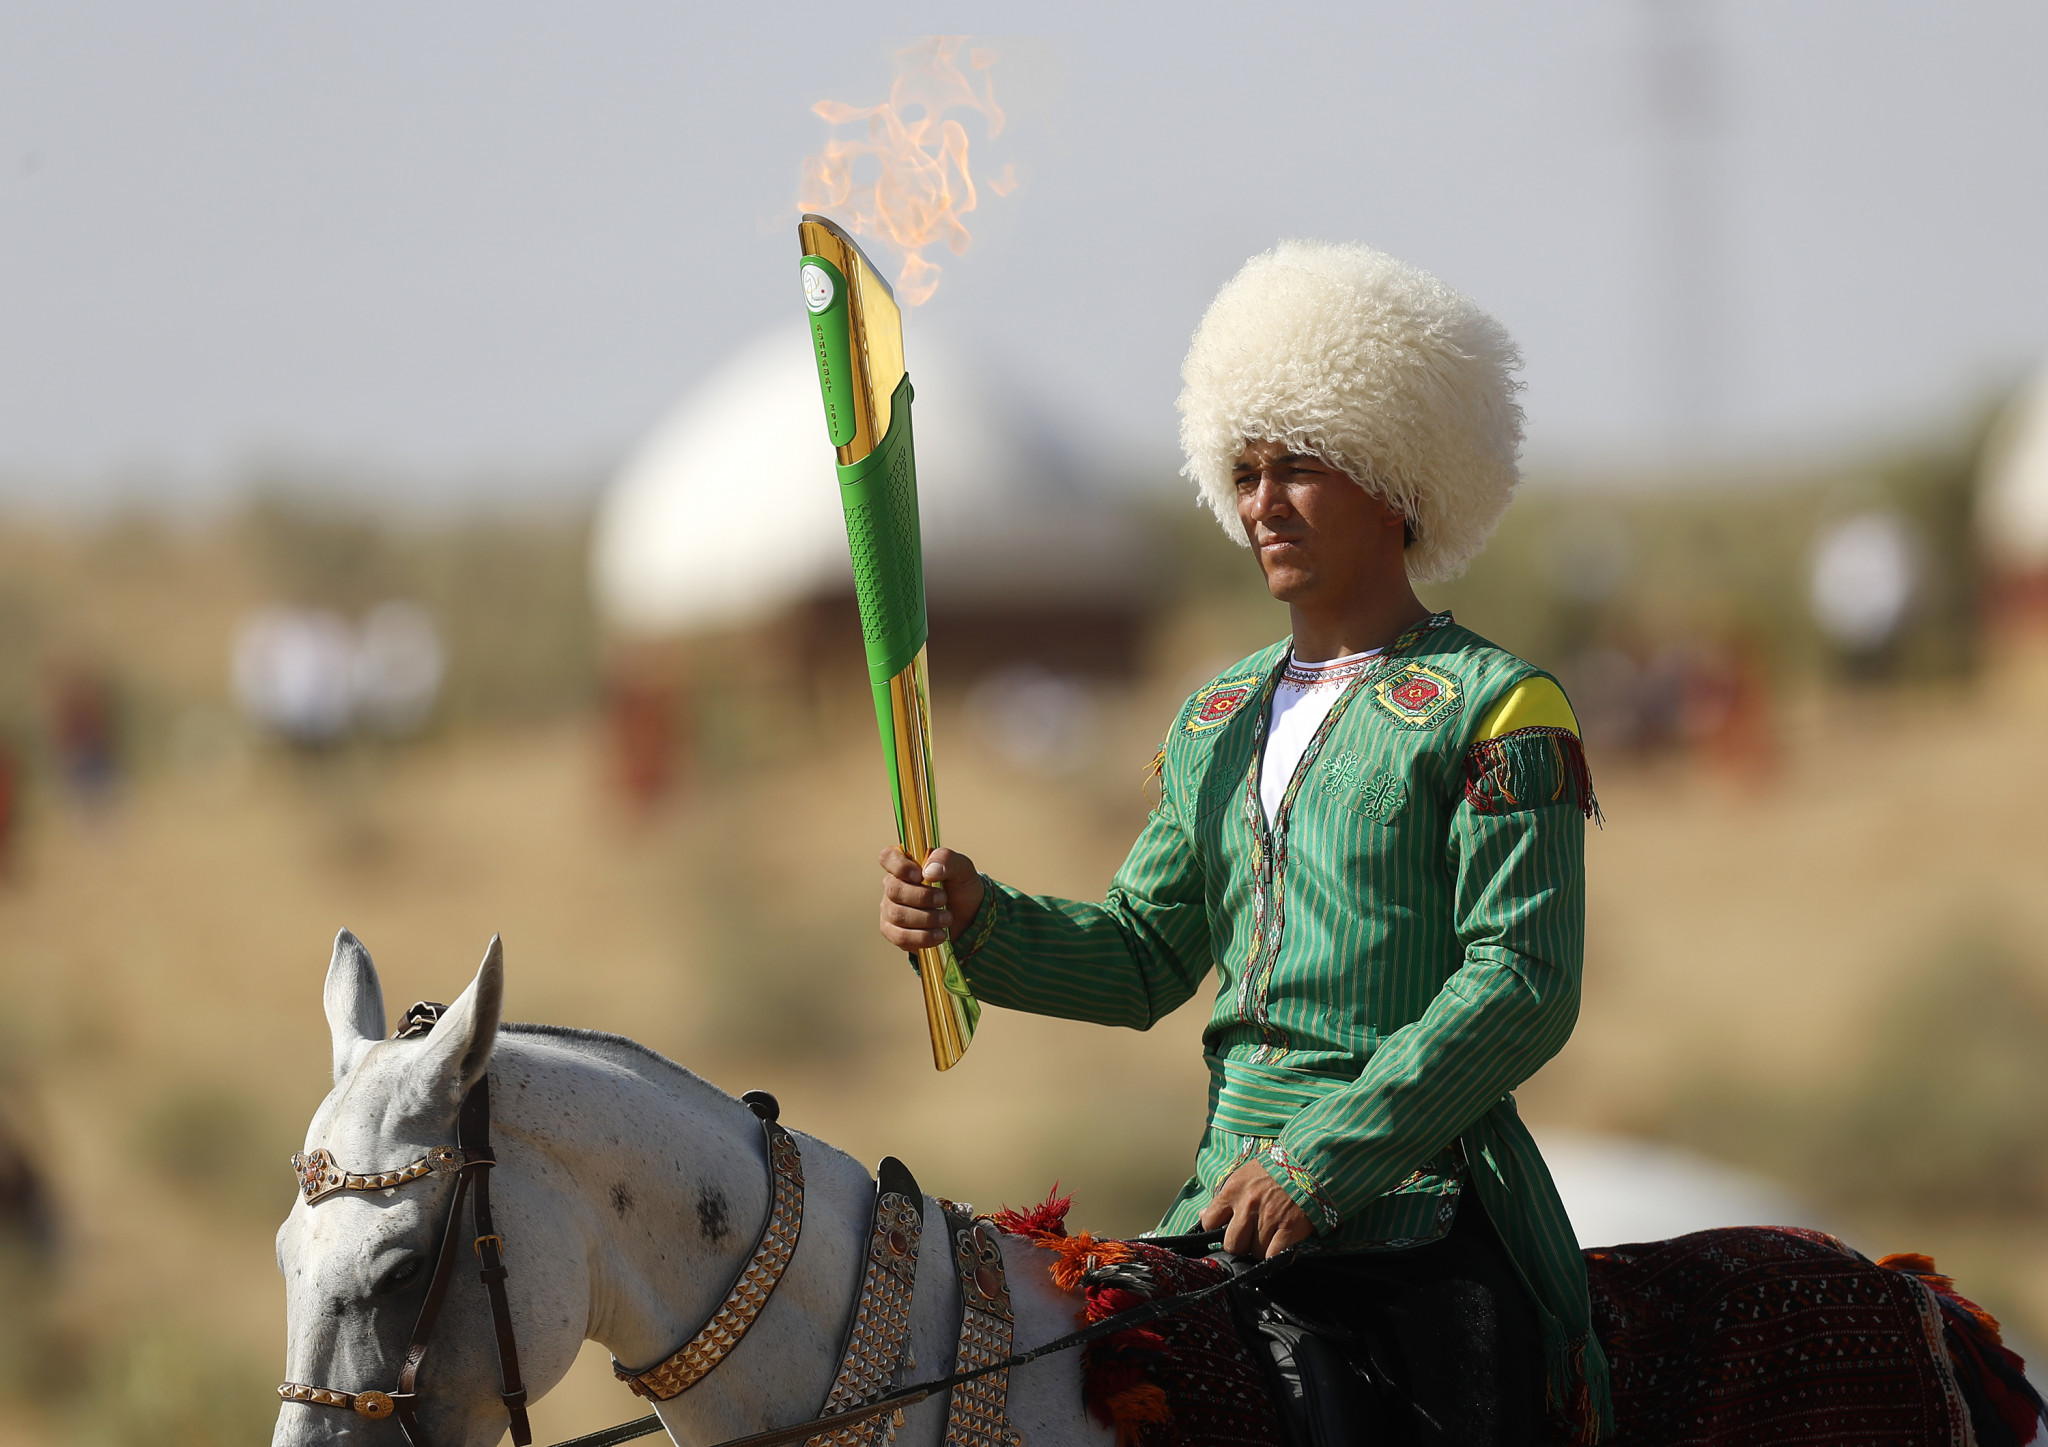 The Torch ceremony marked preparations for Ashgabat 2017 ©Ashgabat 2017